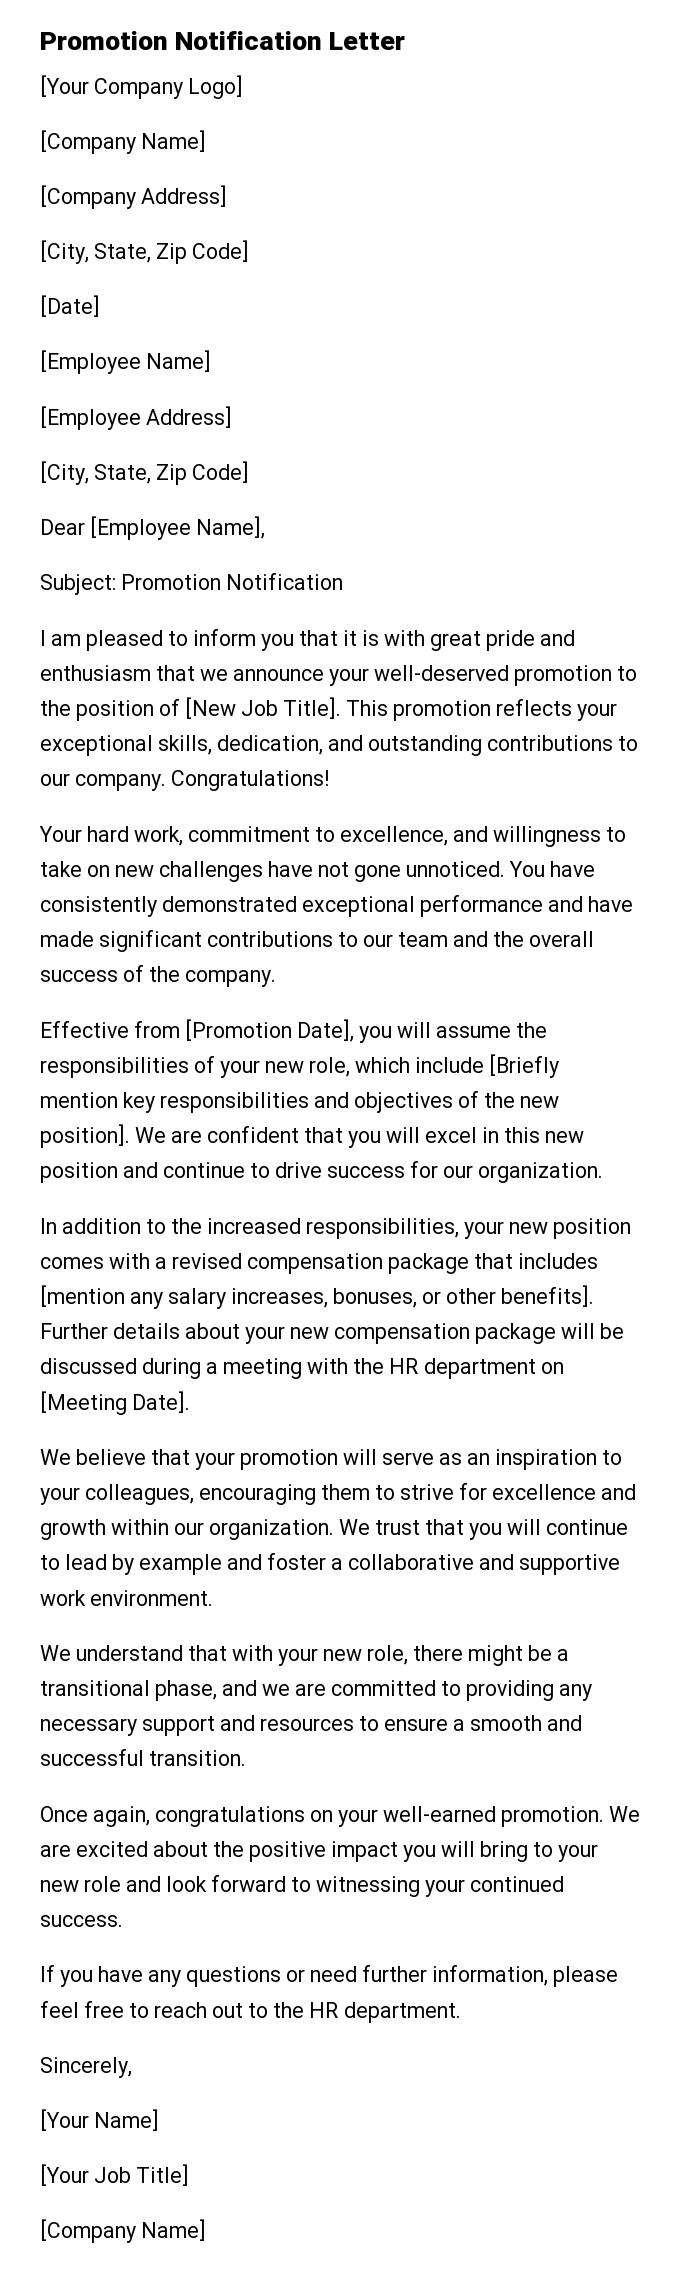 Promotion Notification Letter